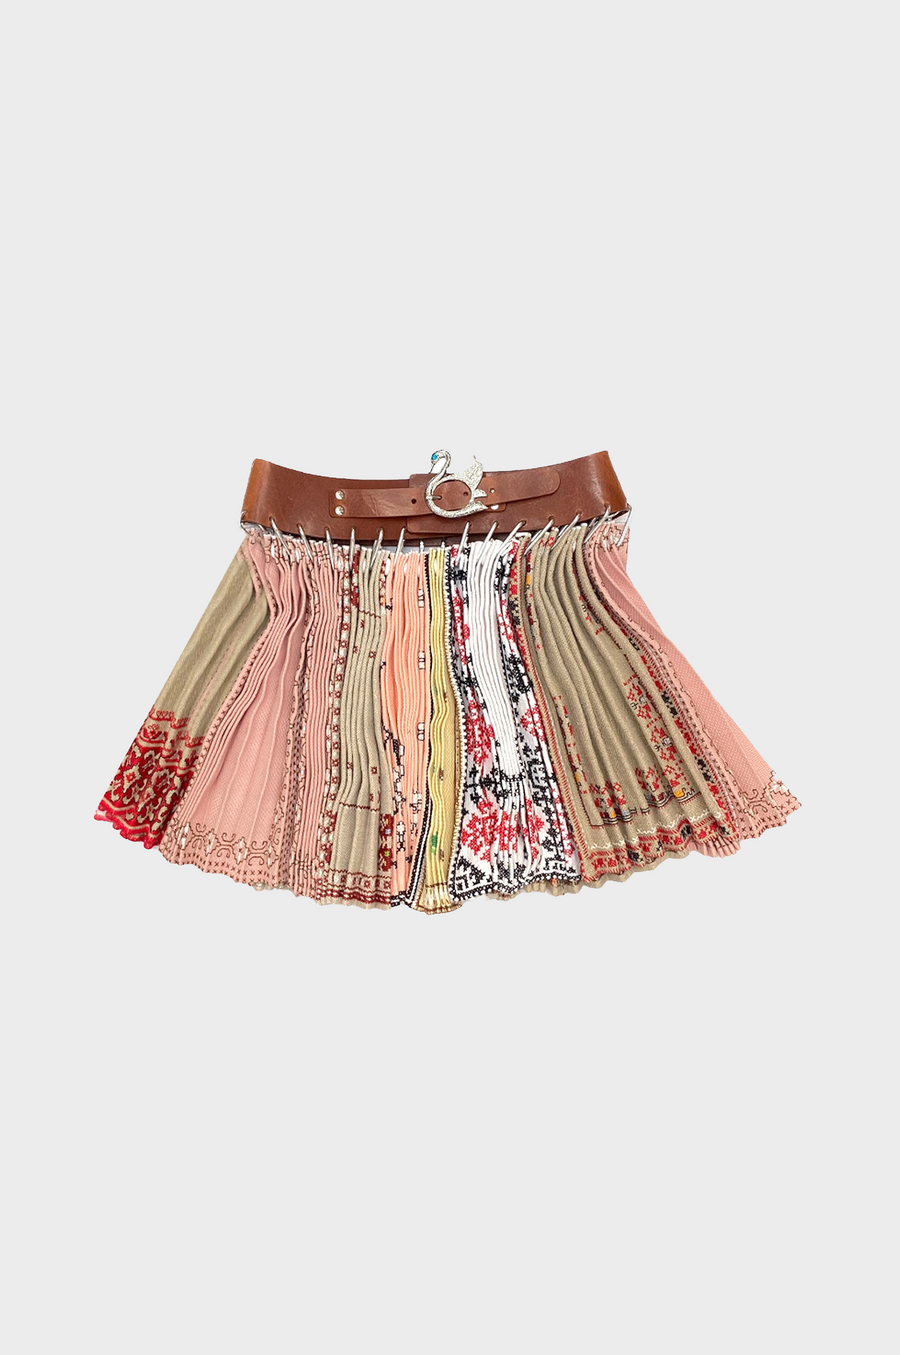 Chopova Lowena - Kare Mini Carabiner Skirt